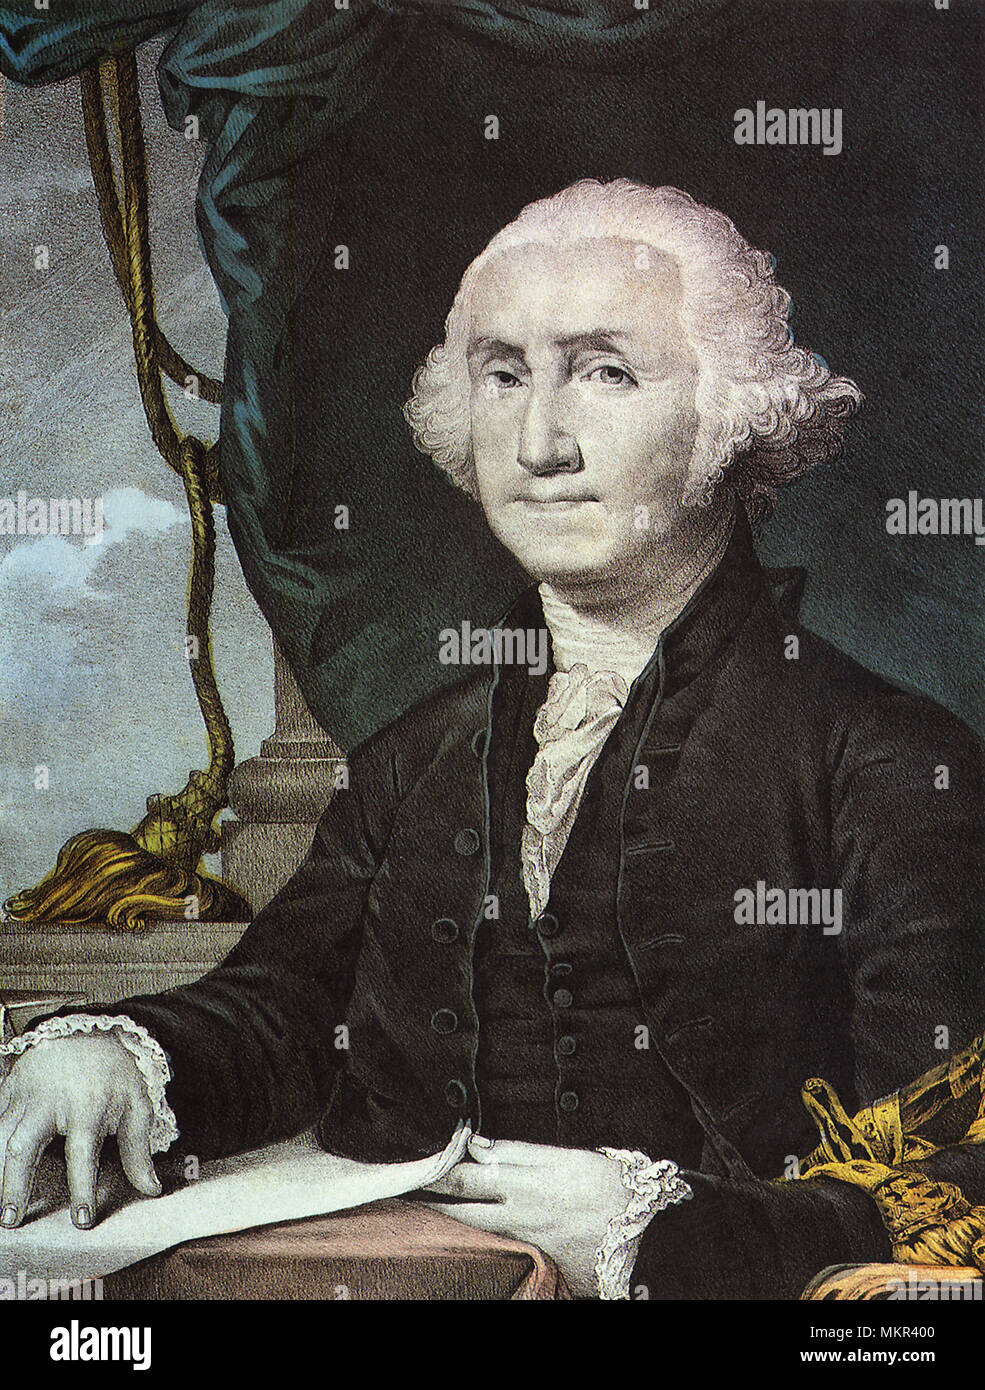 George Washington, First President of the United States 1789 Stock Photo